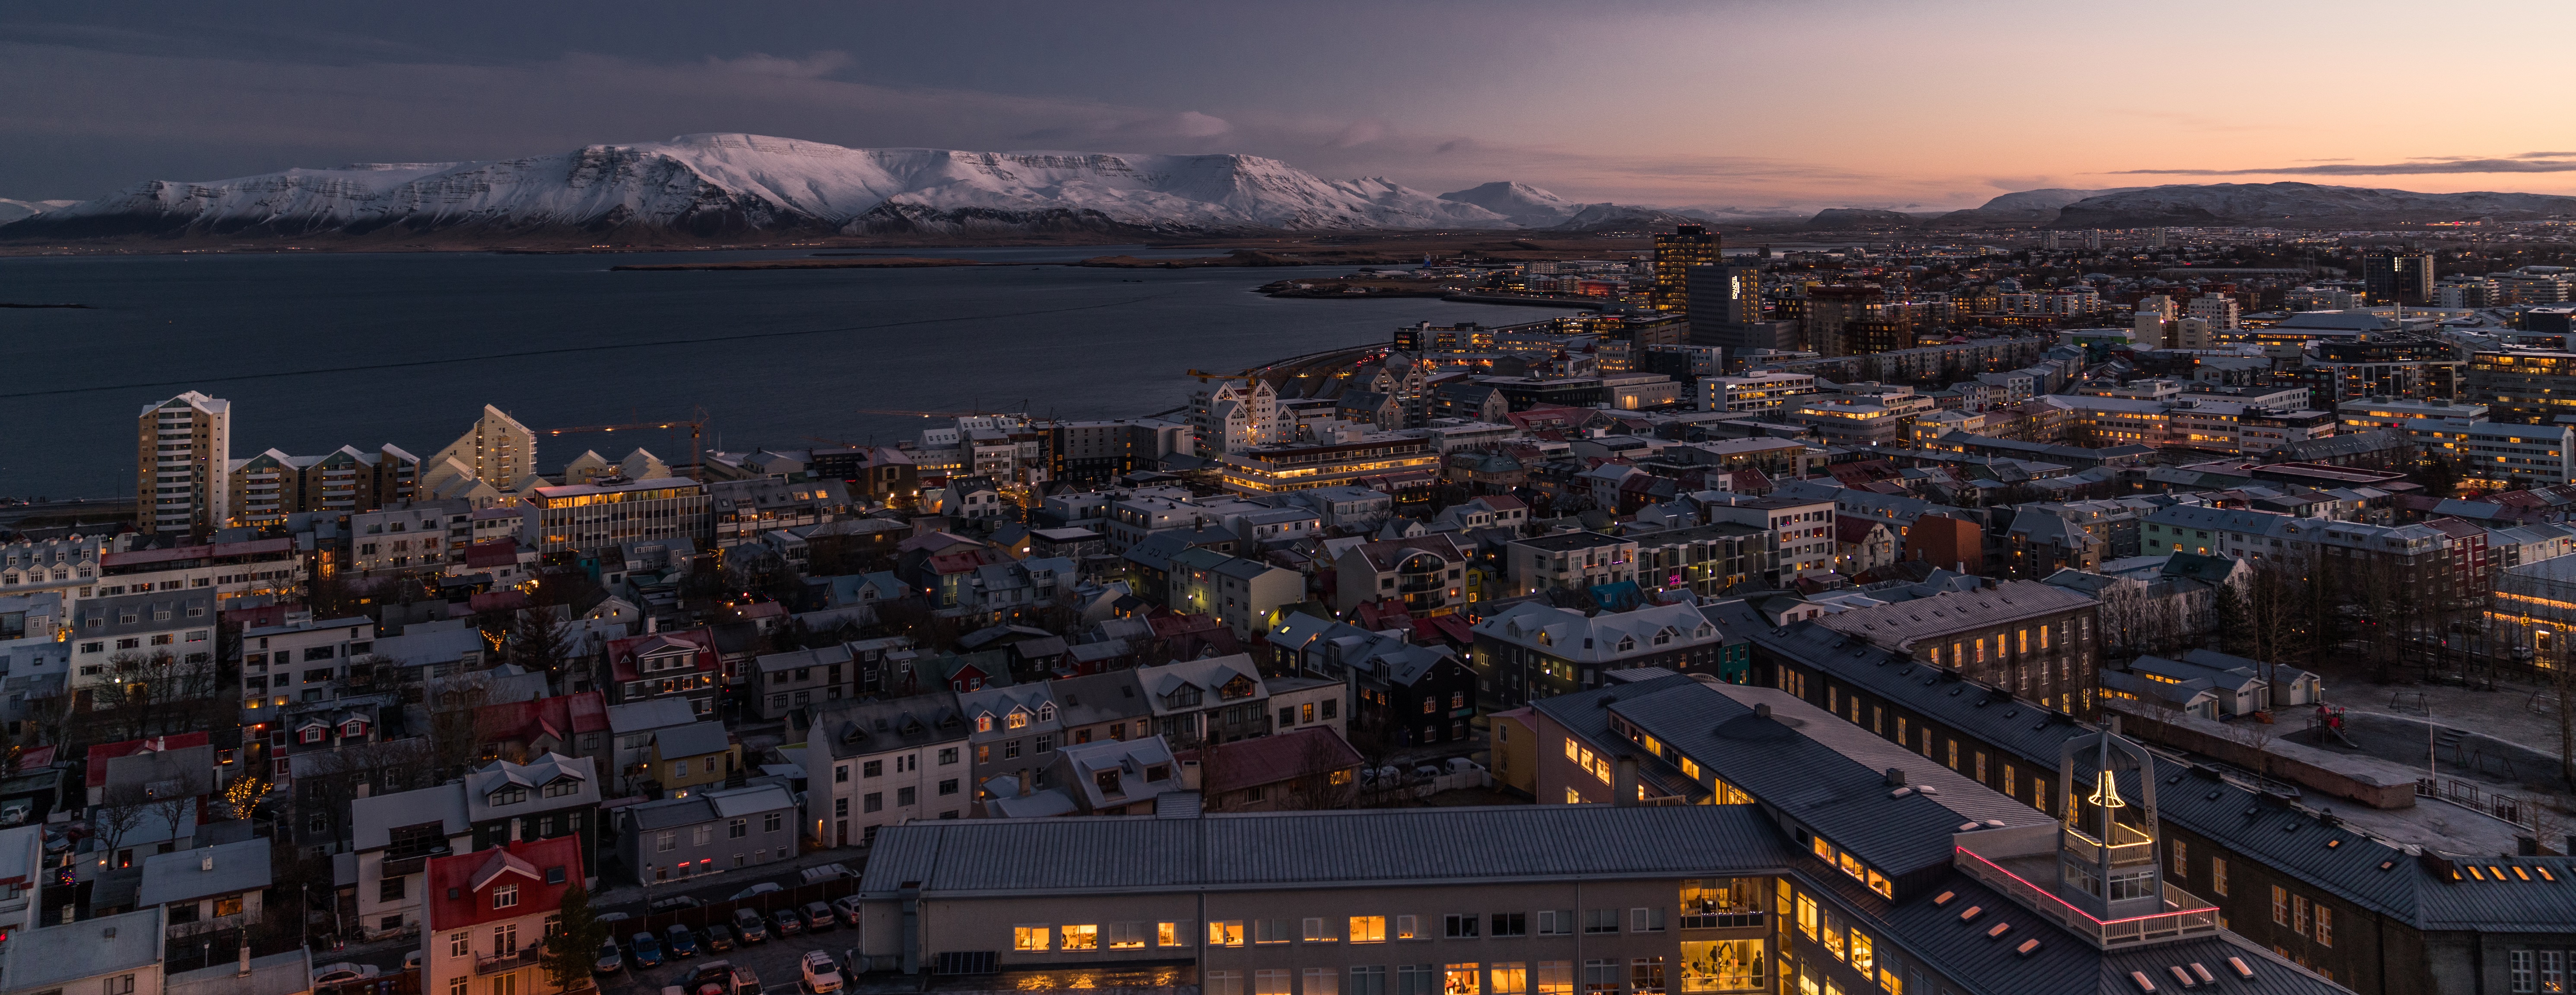 General 5964x2304 city sunset mountains snow multiple display city lights Reykjavik